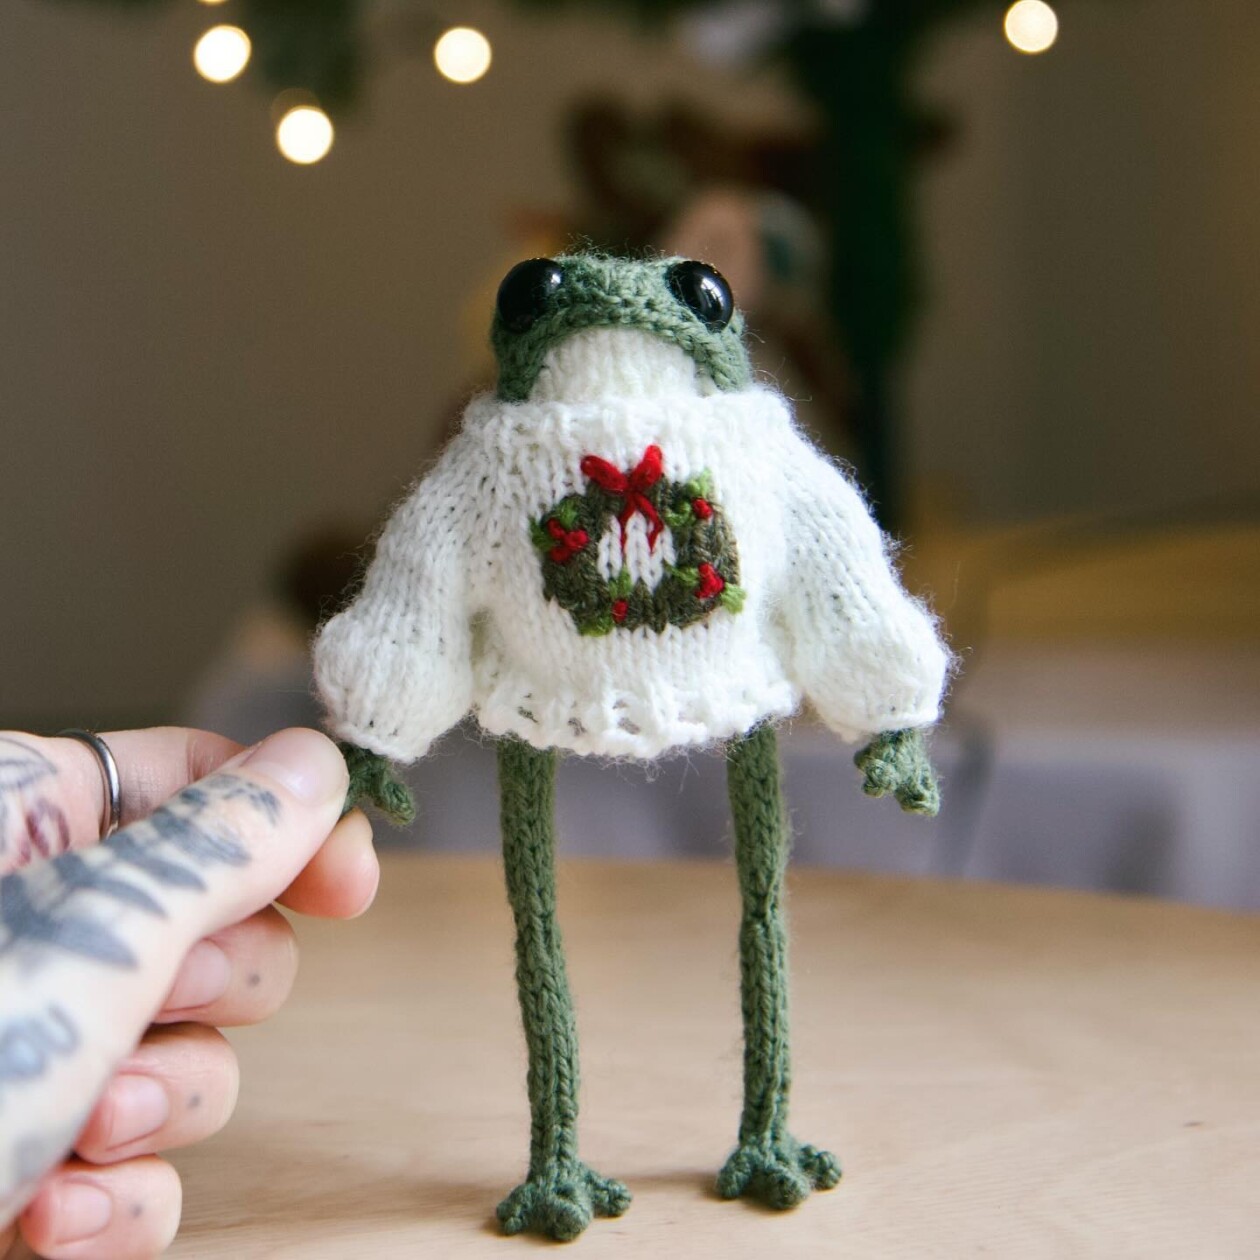 Enchanting Anthropomorphized Frog Crochet Patterns By Elliot (11)